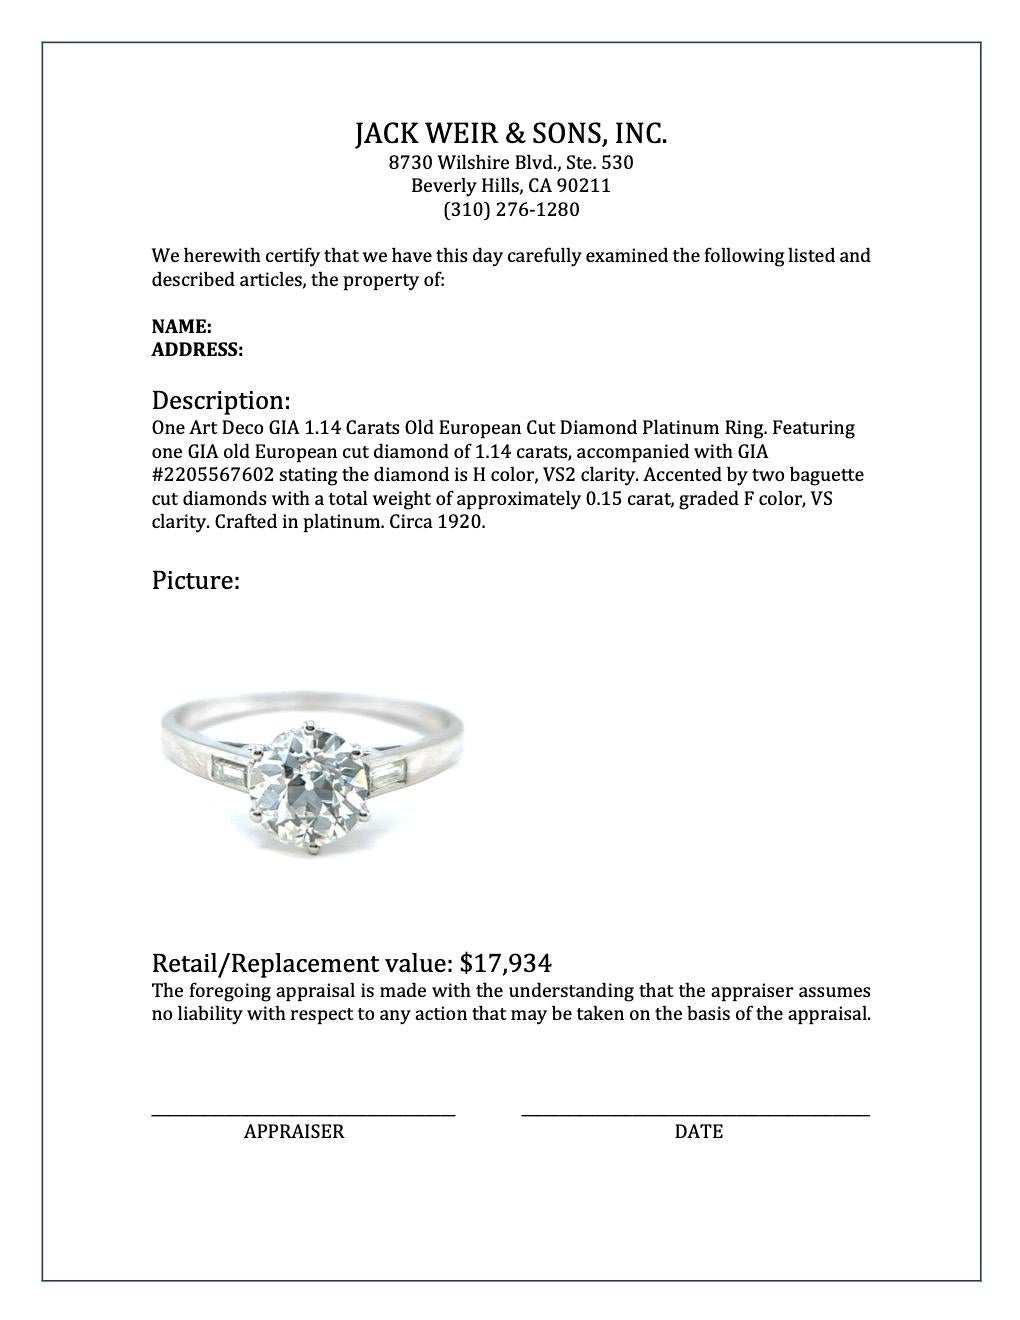 Art Deco GIA 1.14 Carats Old European Cut Diamond Platinum Ring 4